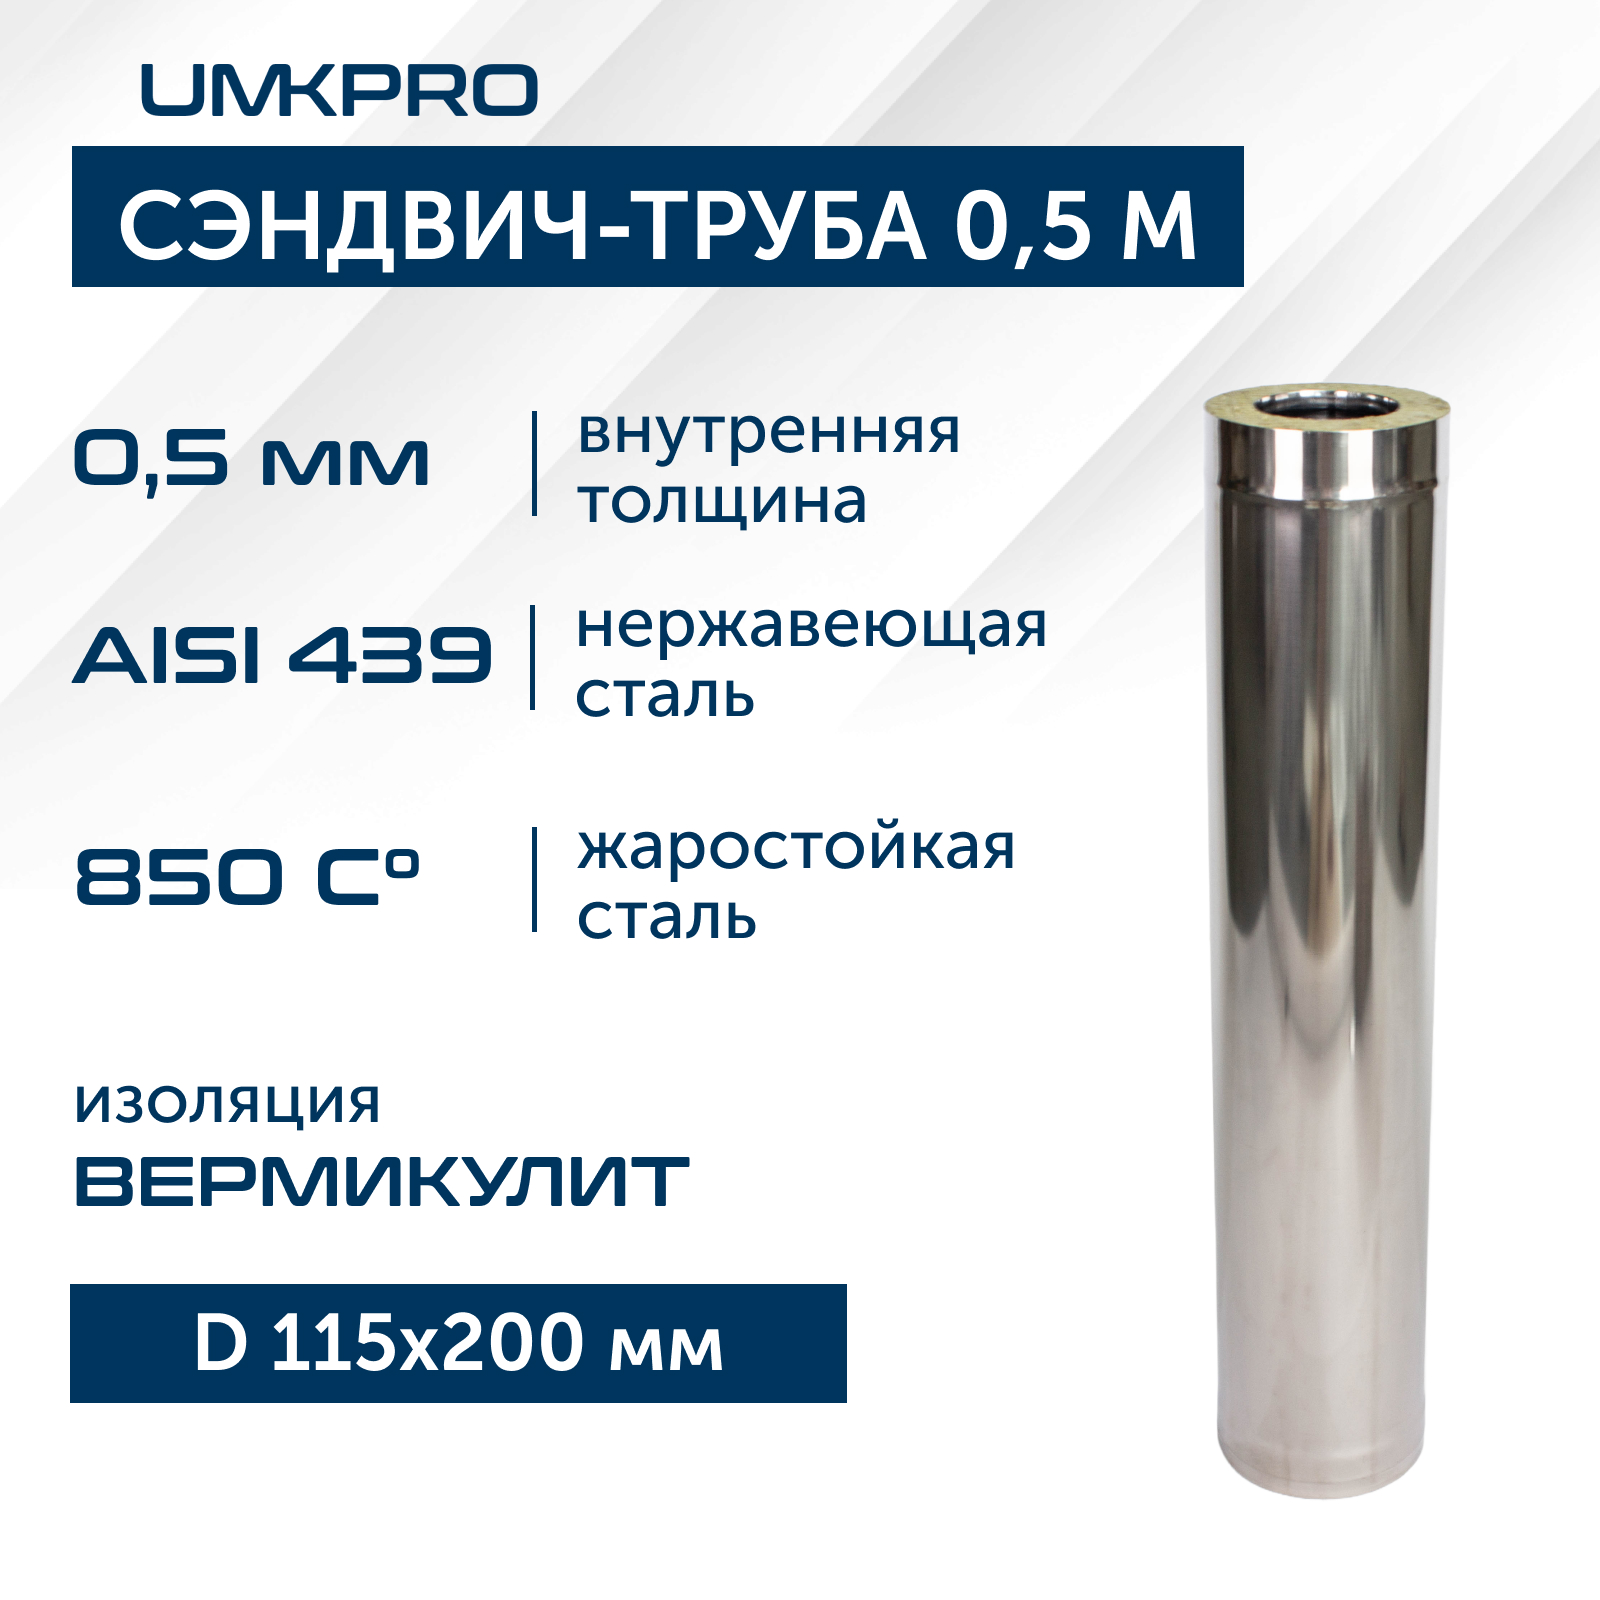 фото Сэндвич-труба umkpro для дымохода 0,5 м d 115х200 aisi 439/439 0,5мм/0,5мм